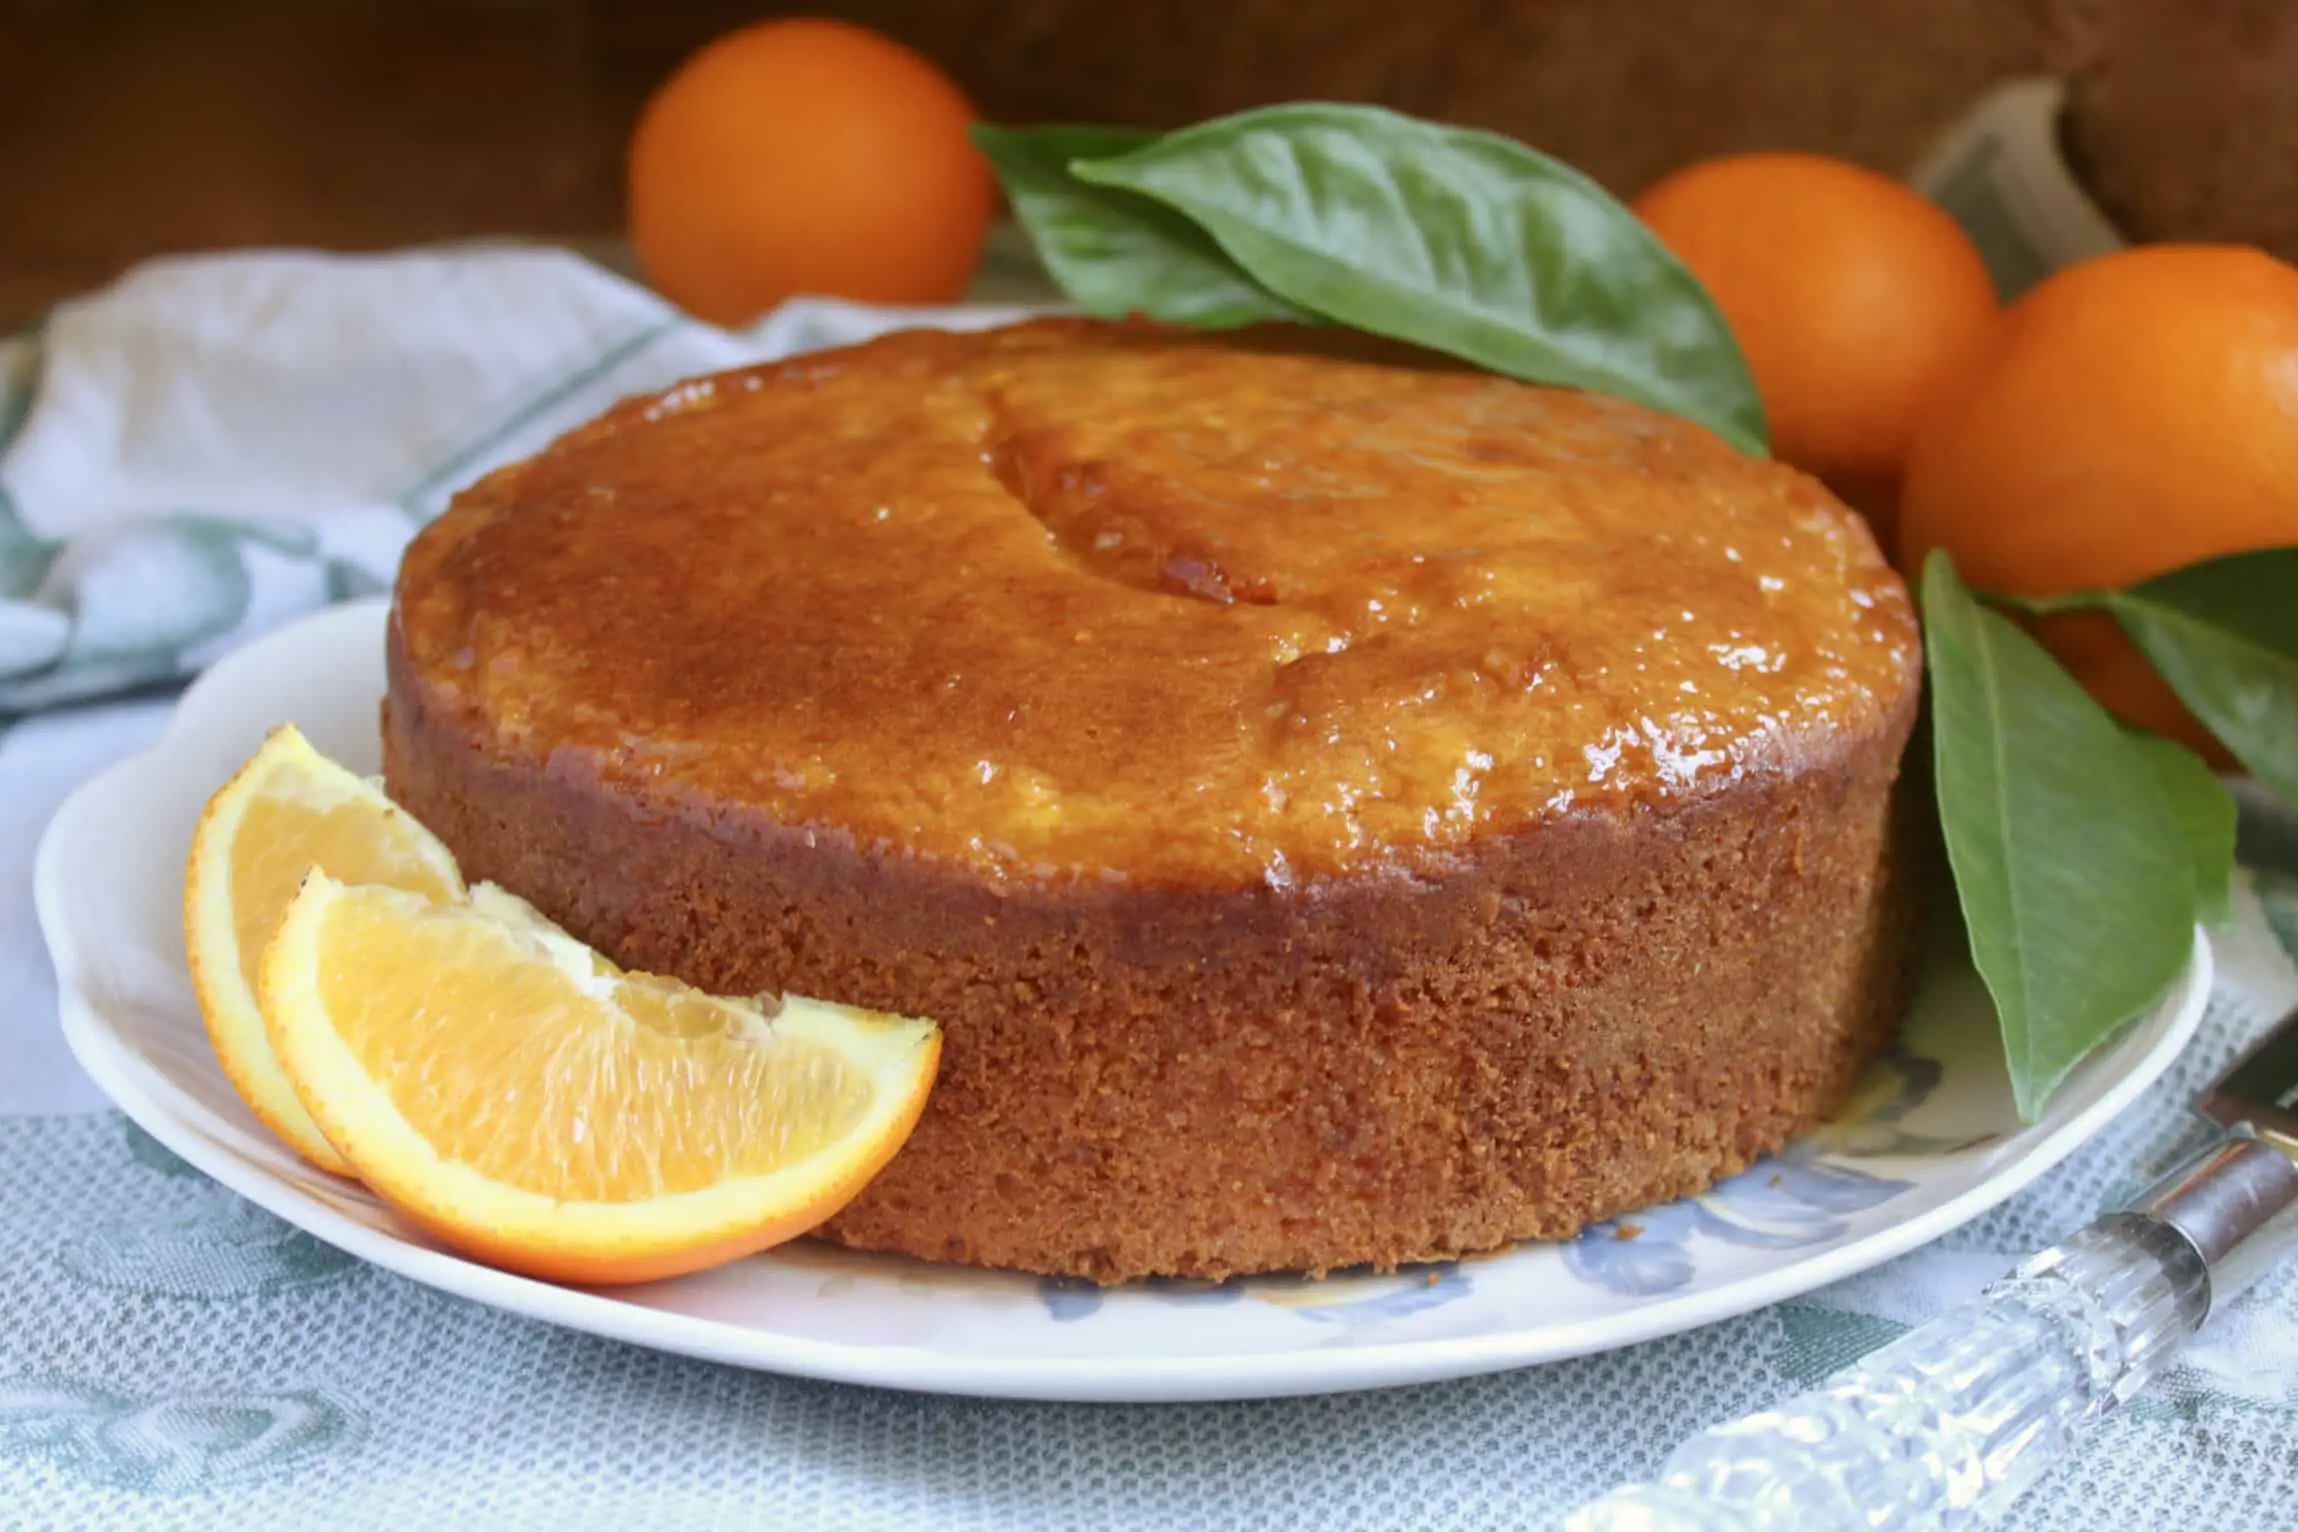 Best Orange Cake Recipe 2022 [Ingredients, Pro Tips and FAQs]